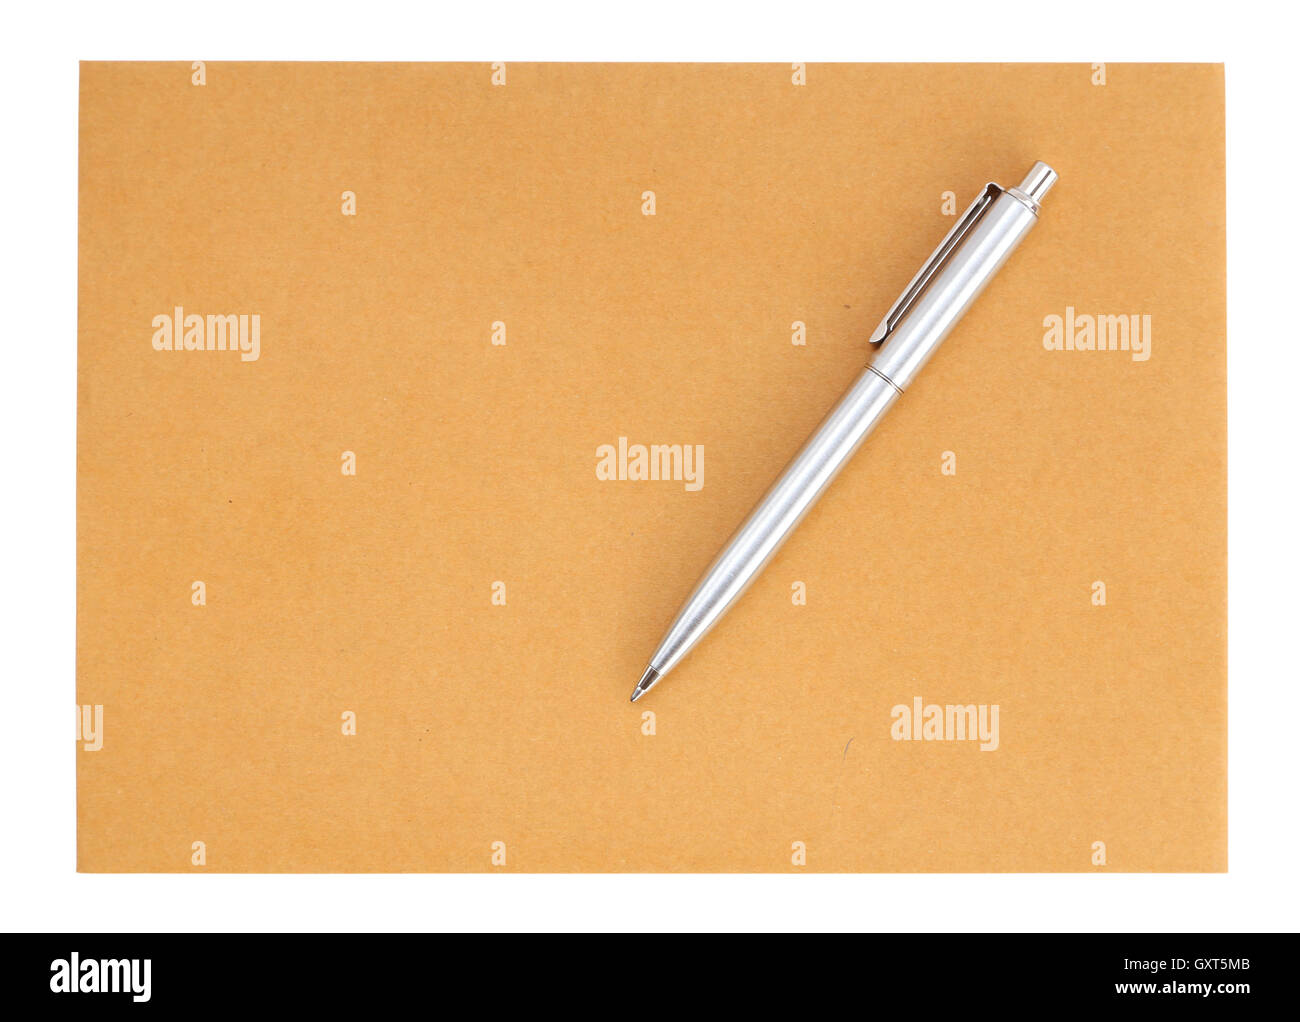 pen on the envelope on white background Stock Photo